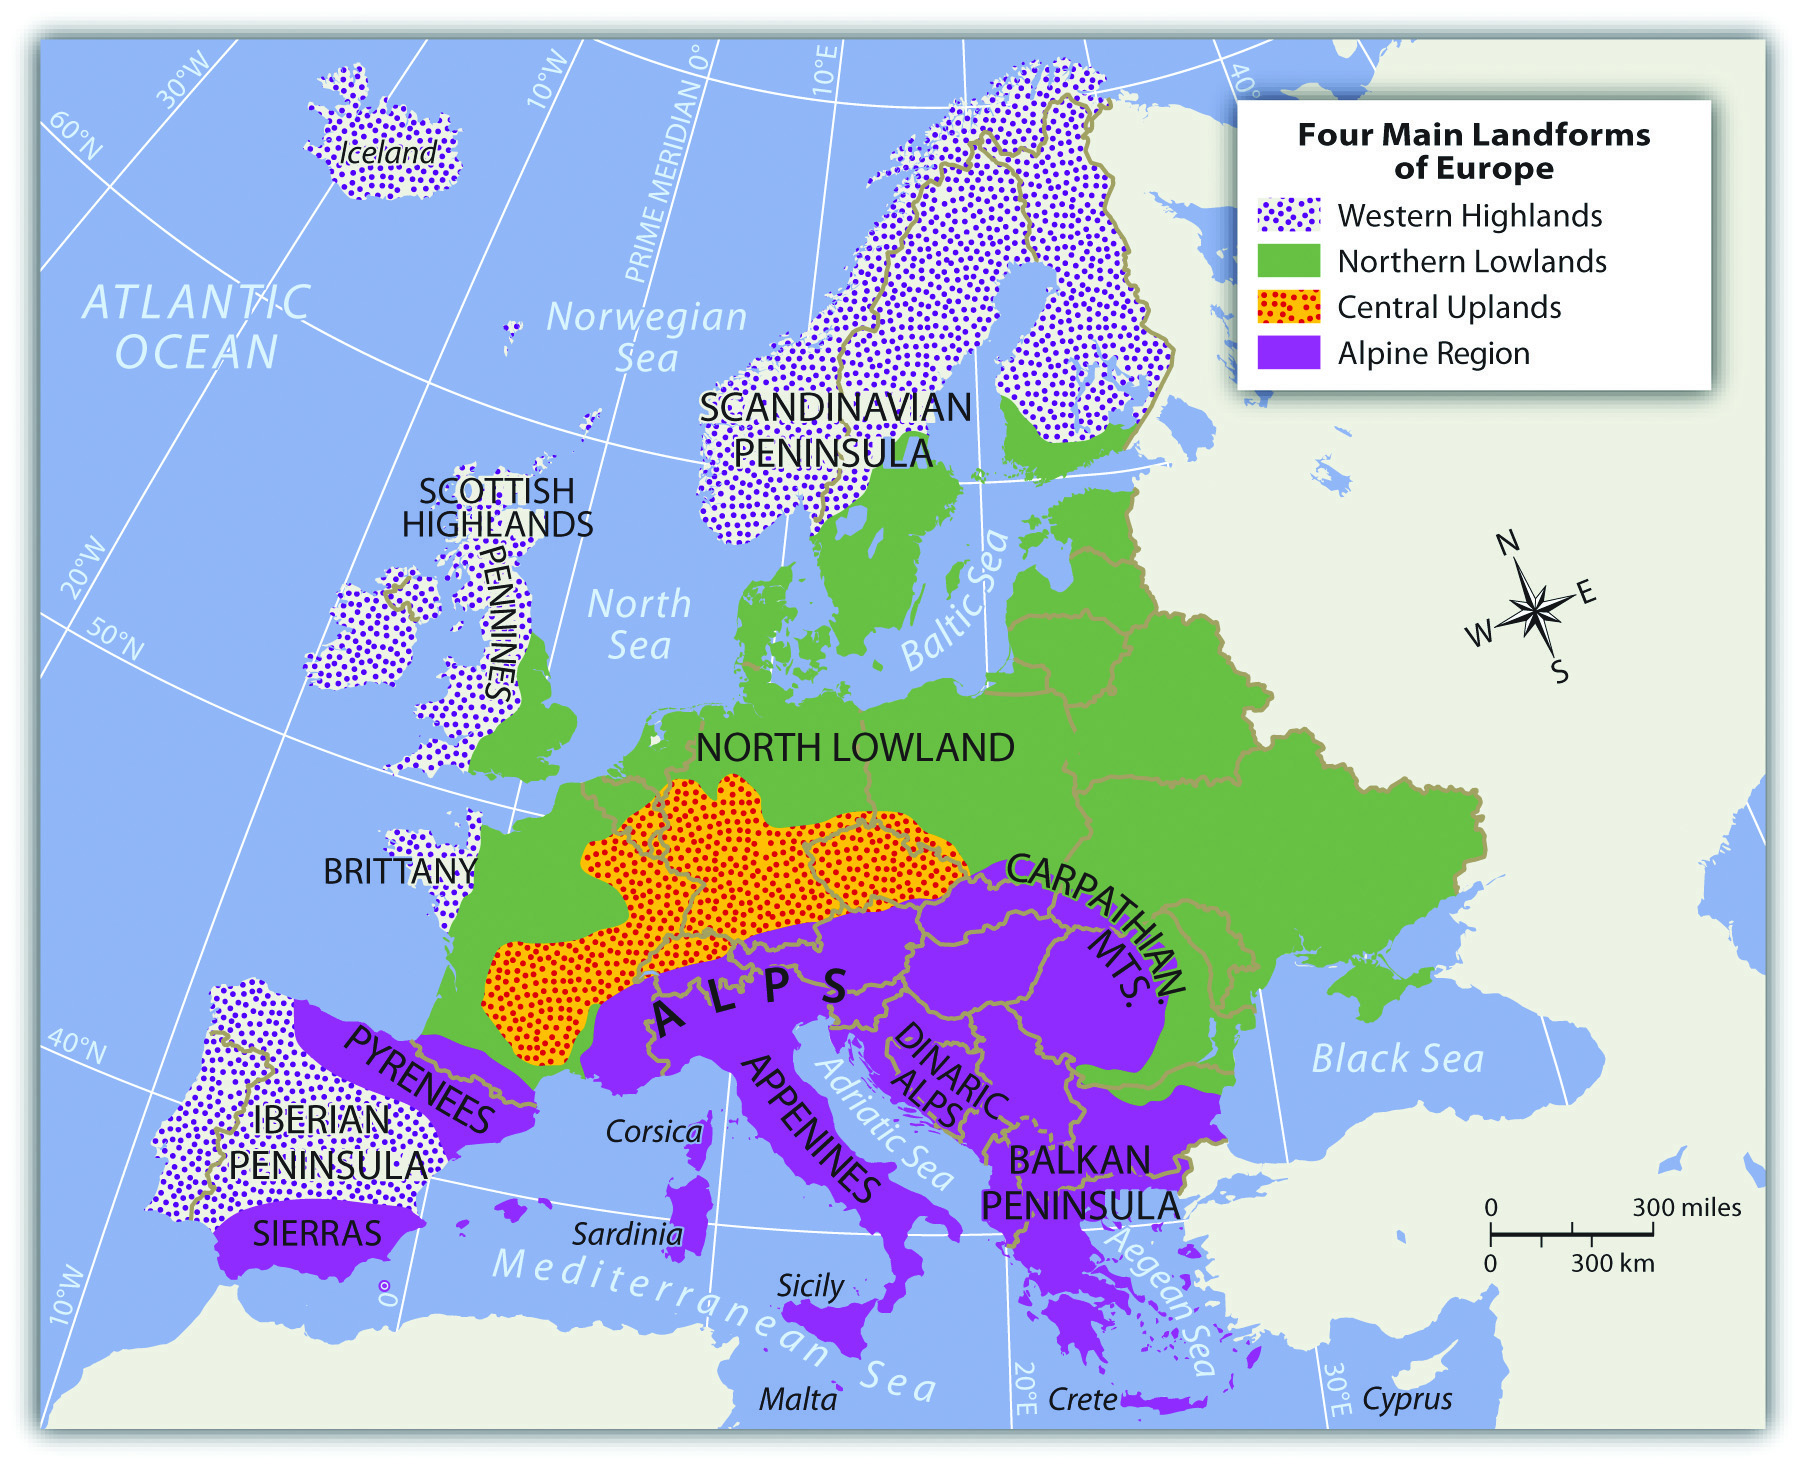 central european wine maps